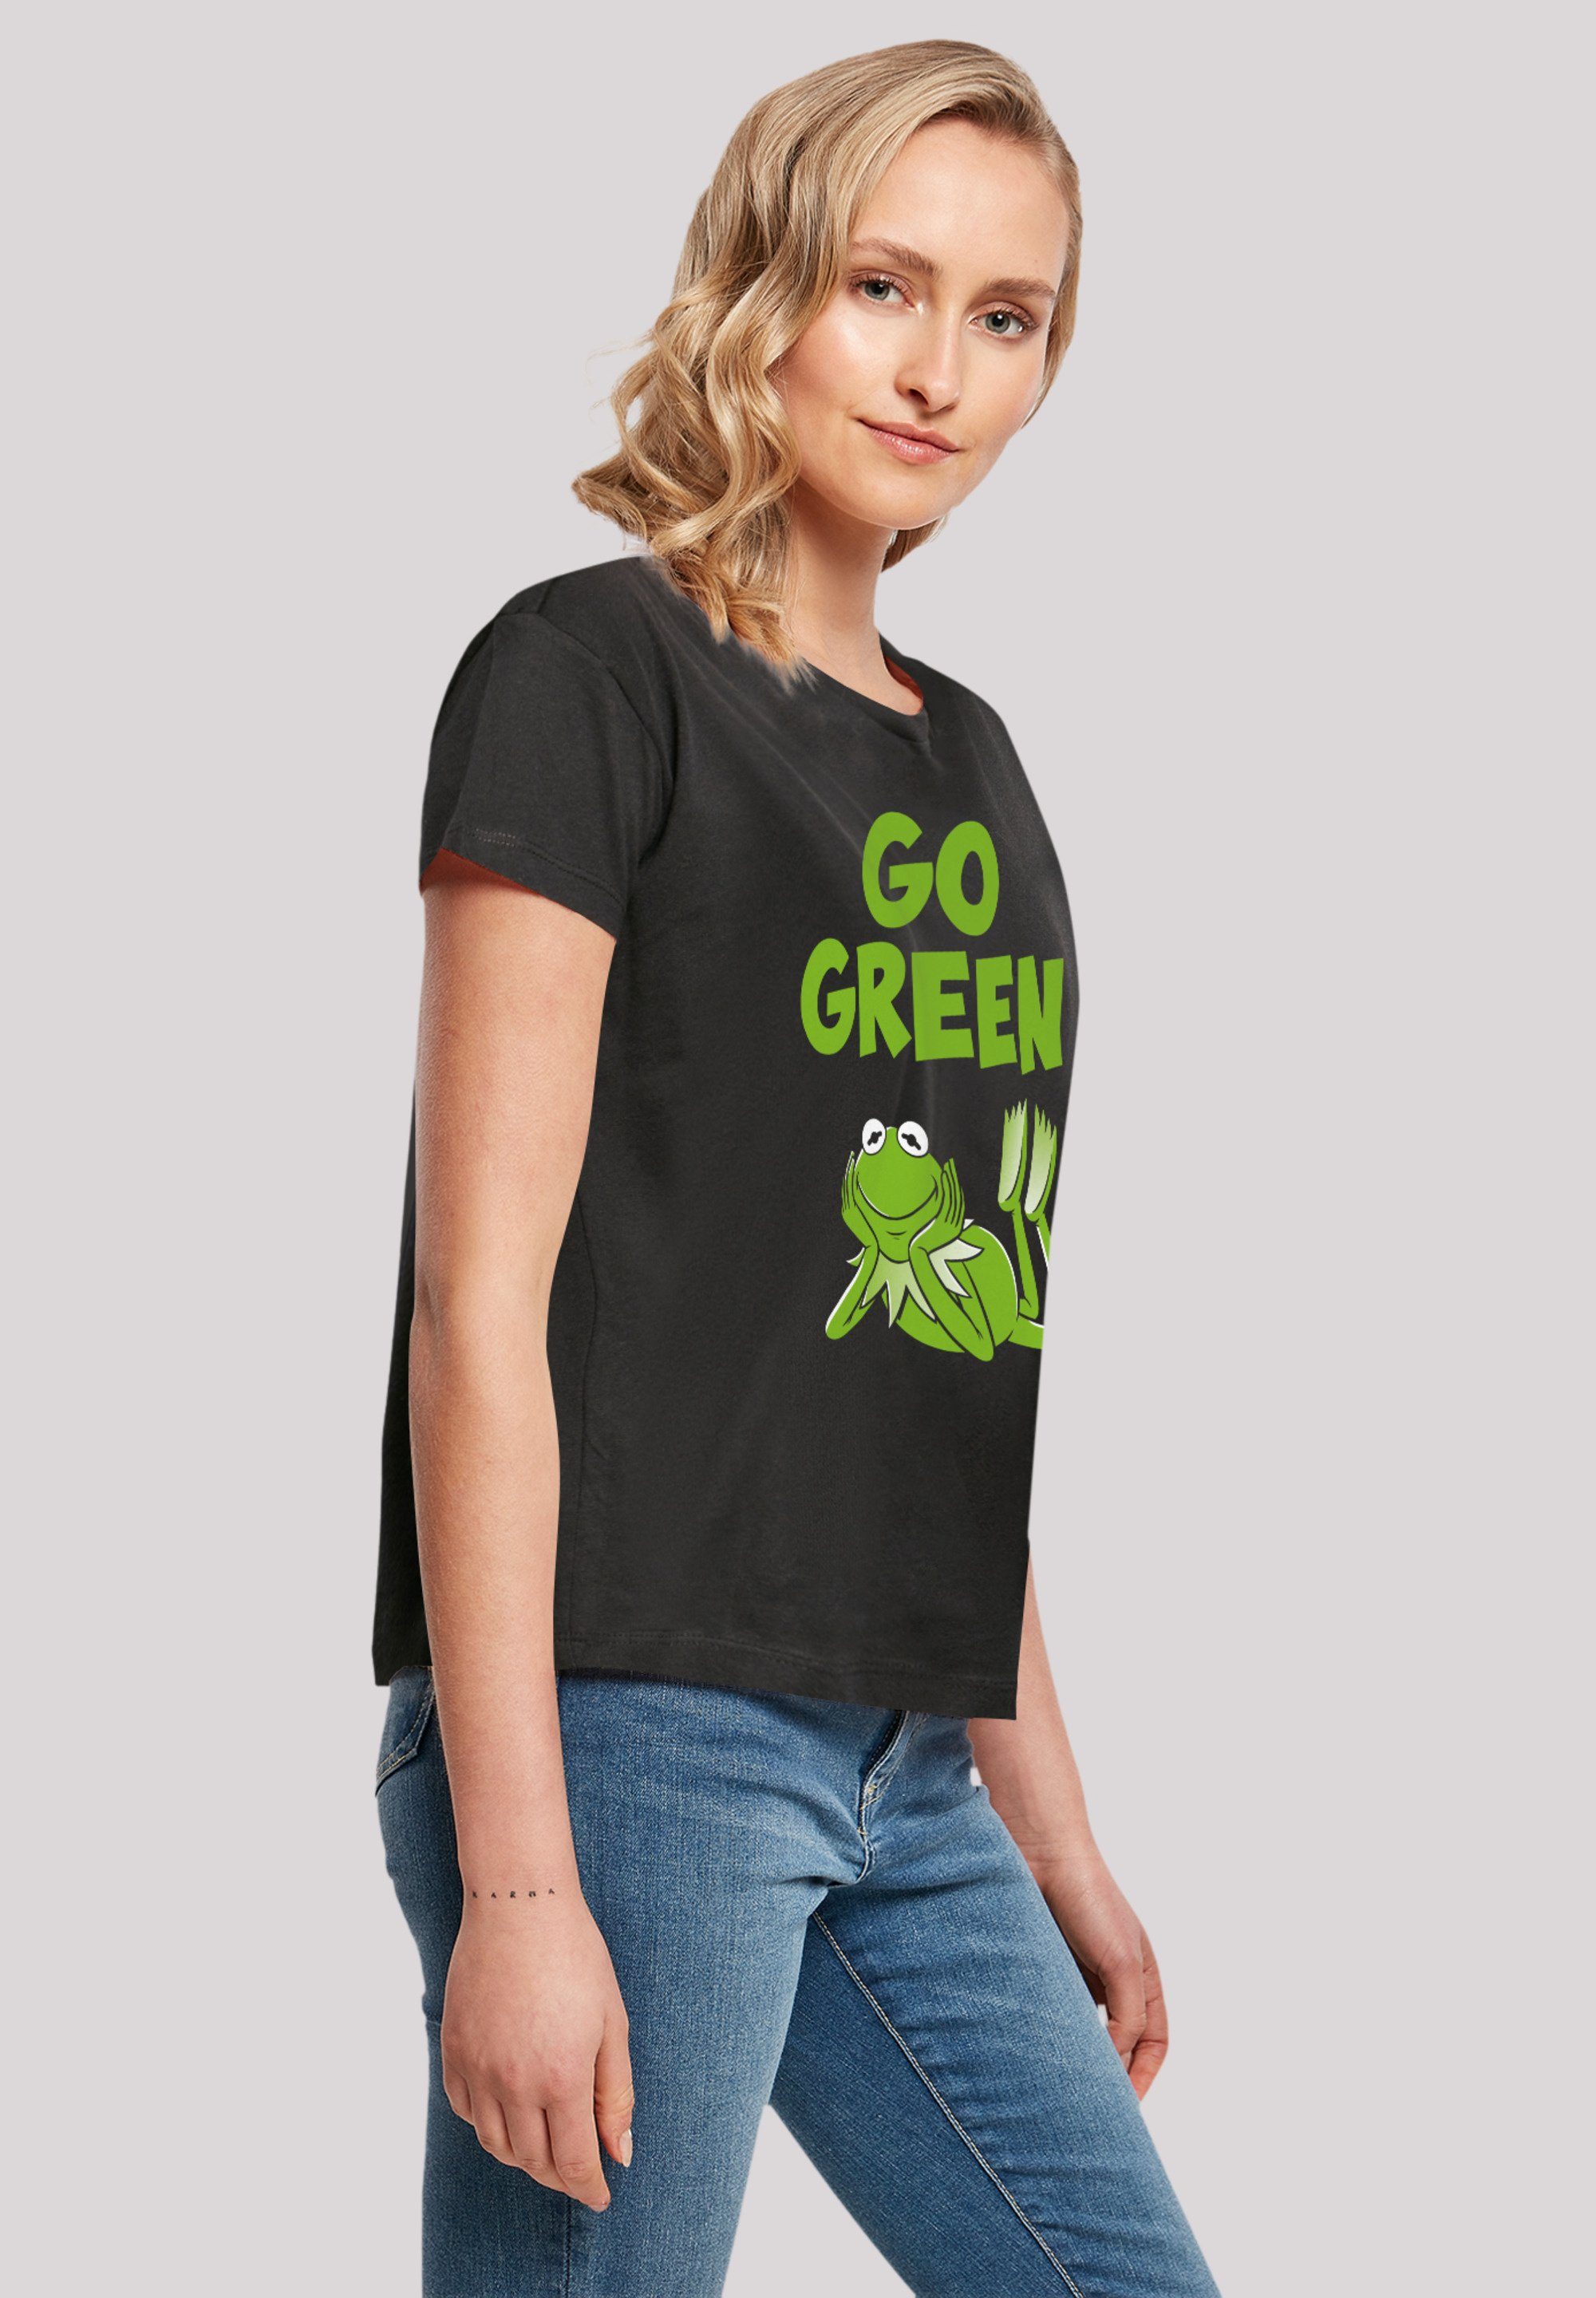 F4NT4STIC T-Shirt Premium Muppets Green Qualität Go Disney